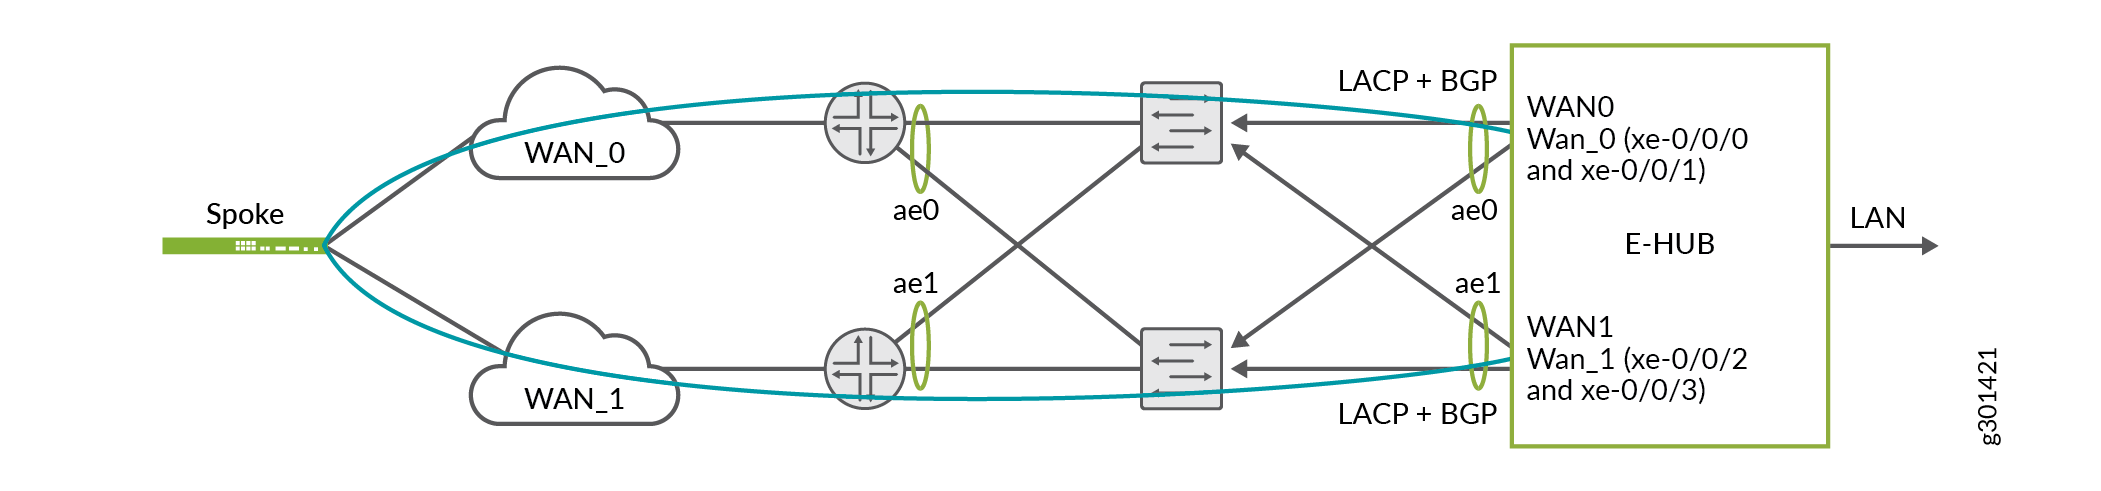 Aggregated Ethernet Topology of Enterprise
Hub WAN Links